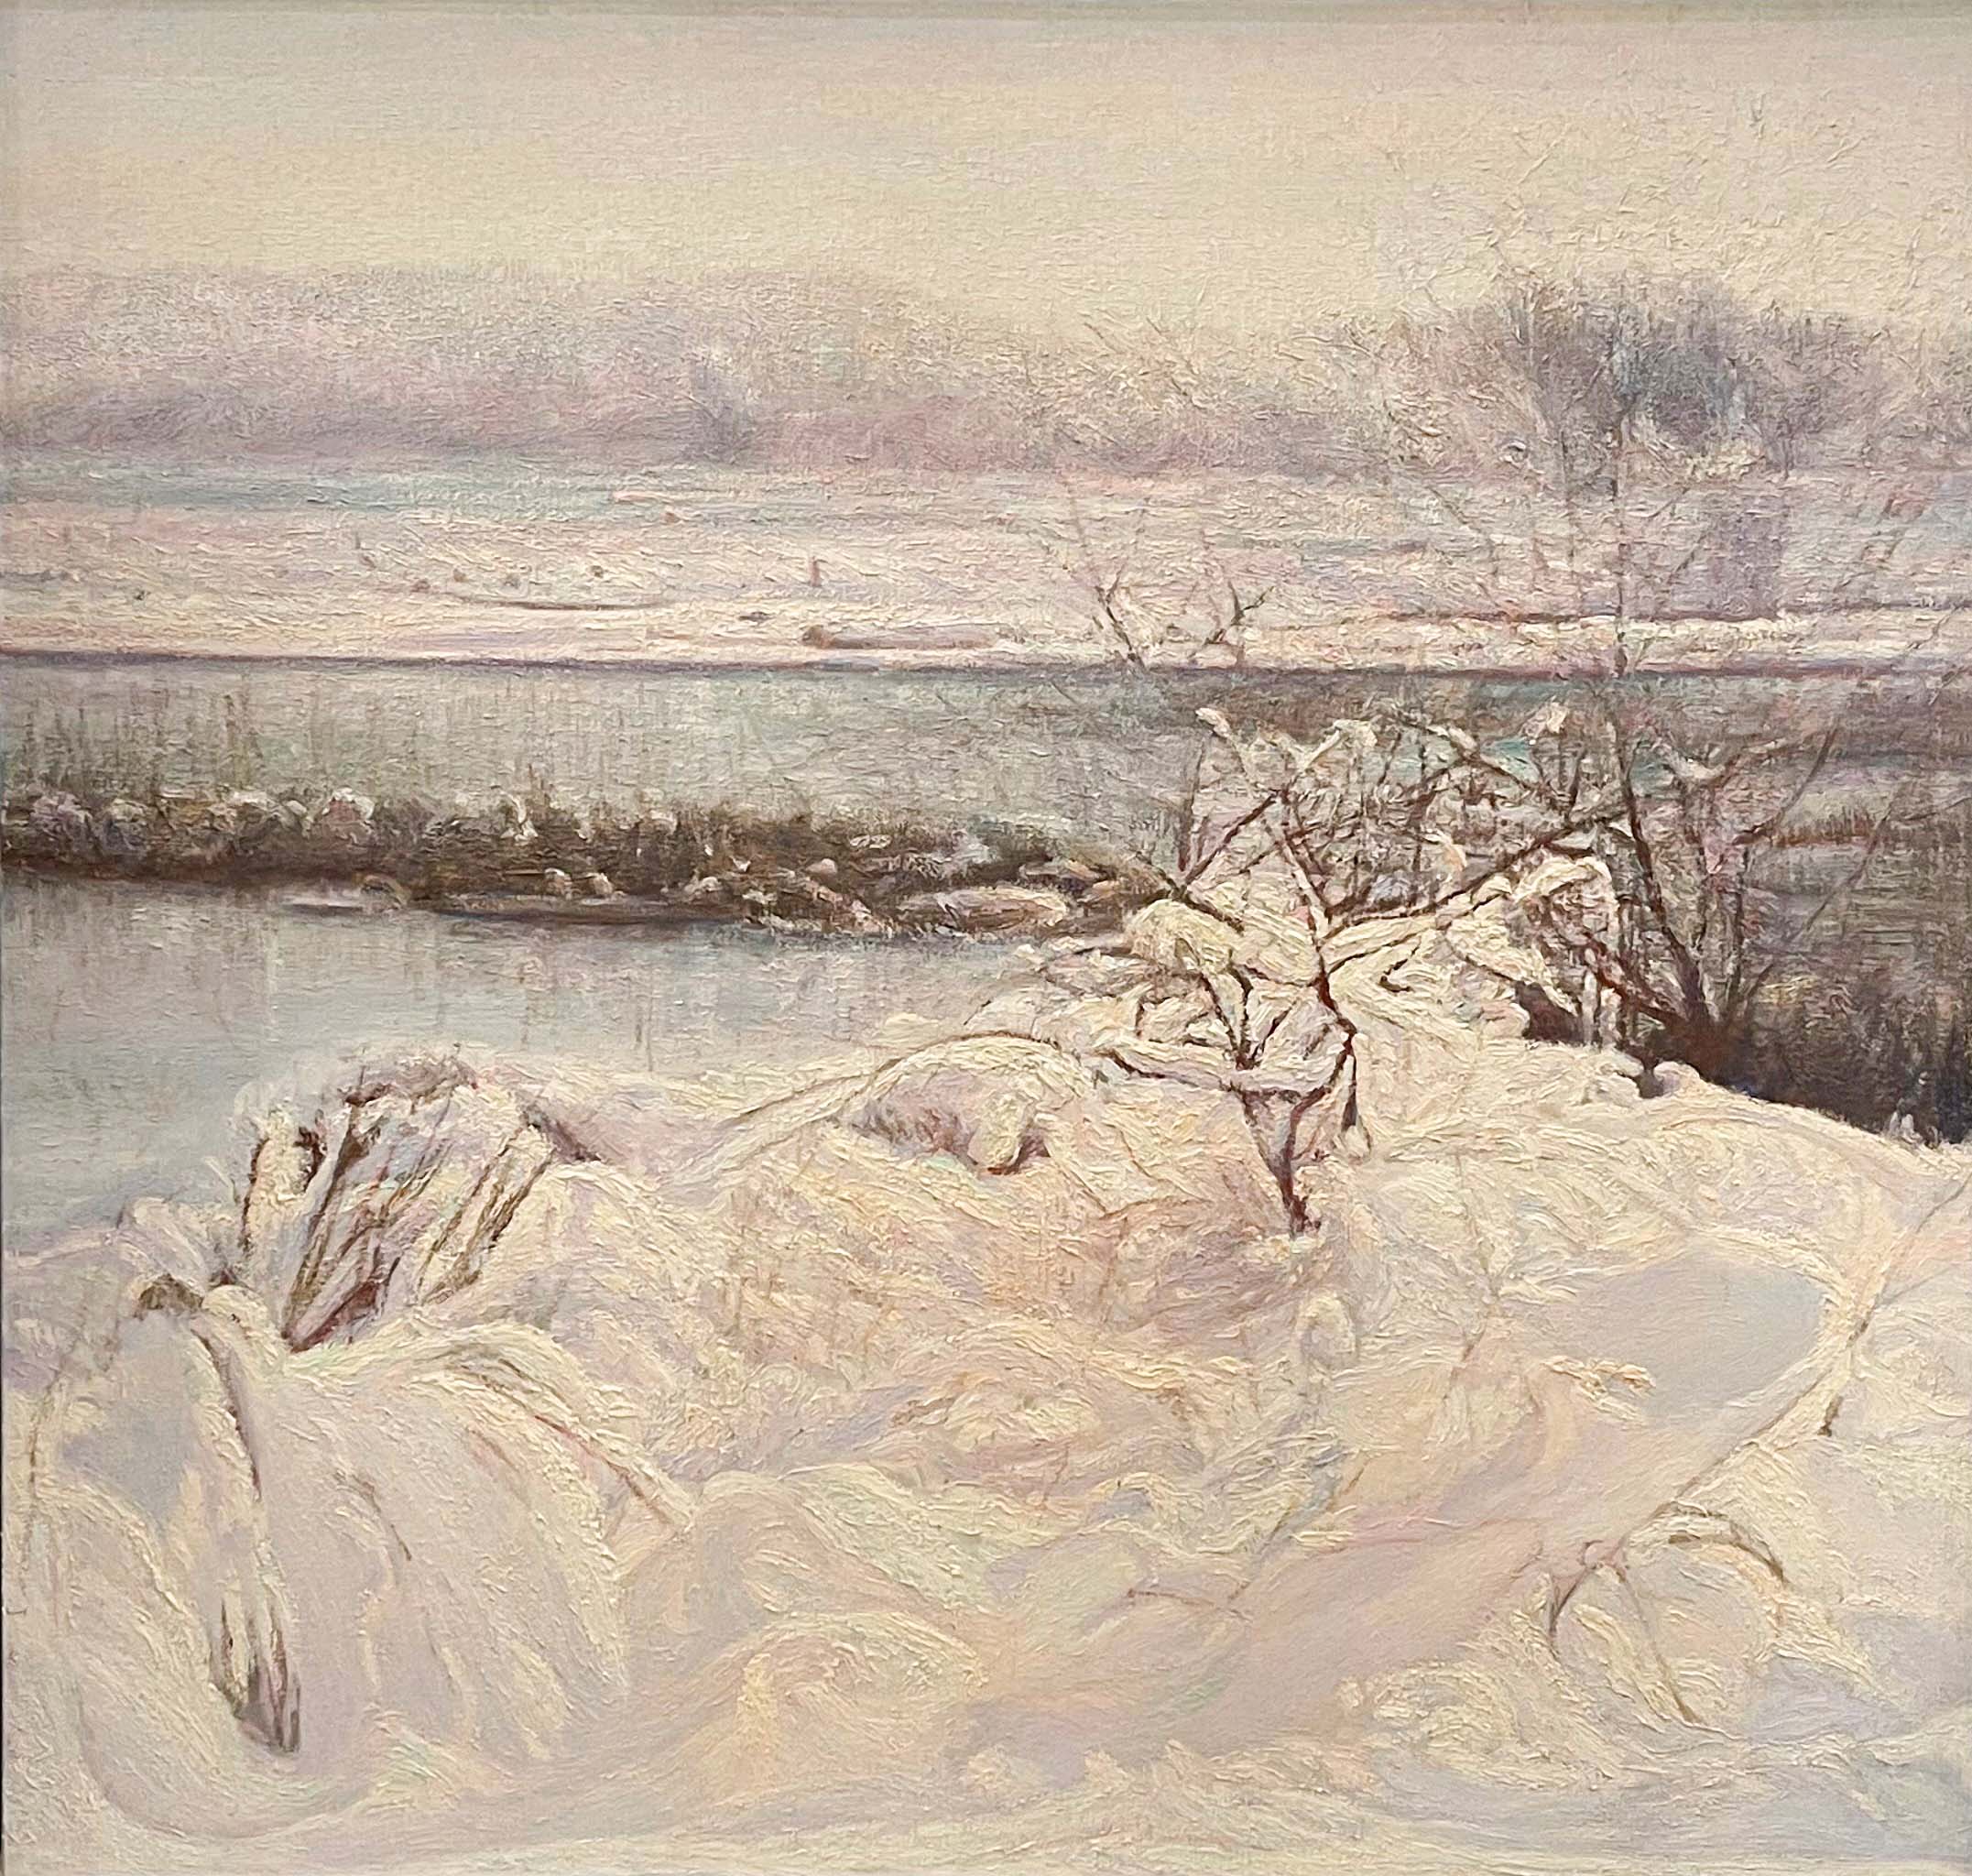 Contemporary art. Title: Western Winter Western Light, Oil on Canvas, 30x31.5 in by Canadian artist Paul Chizik.